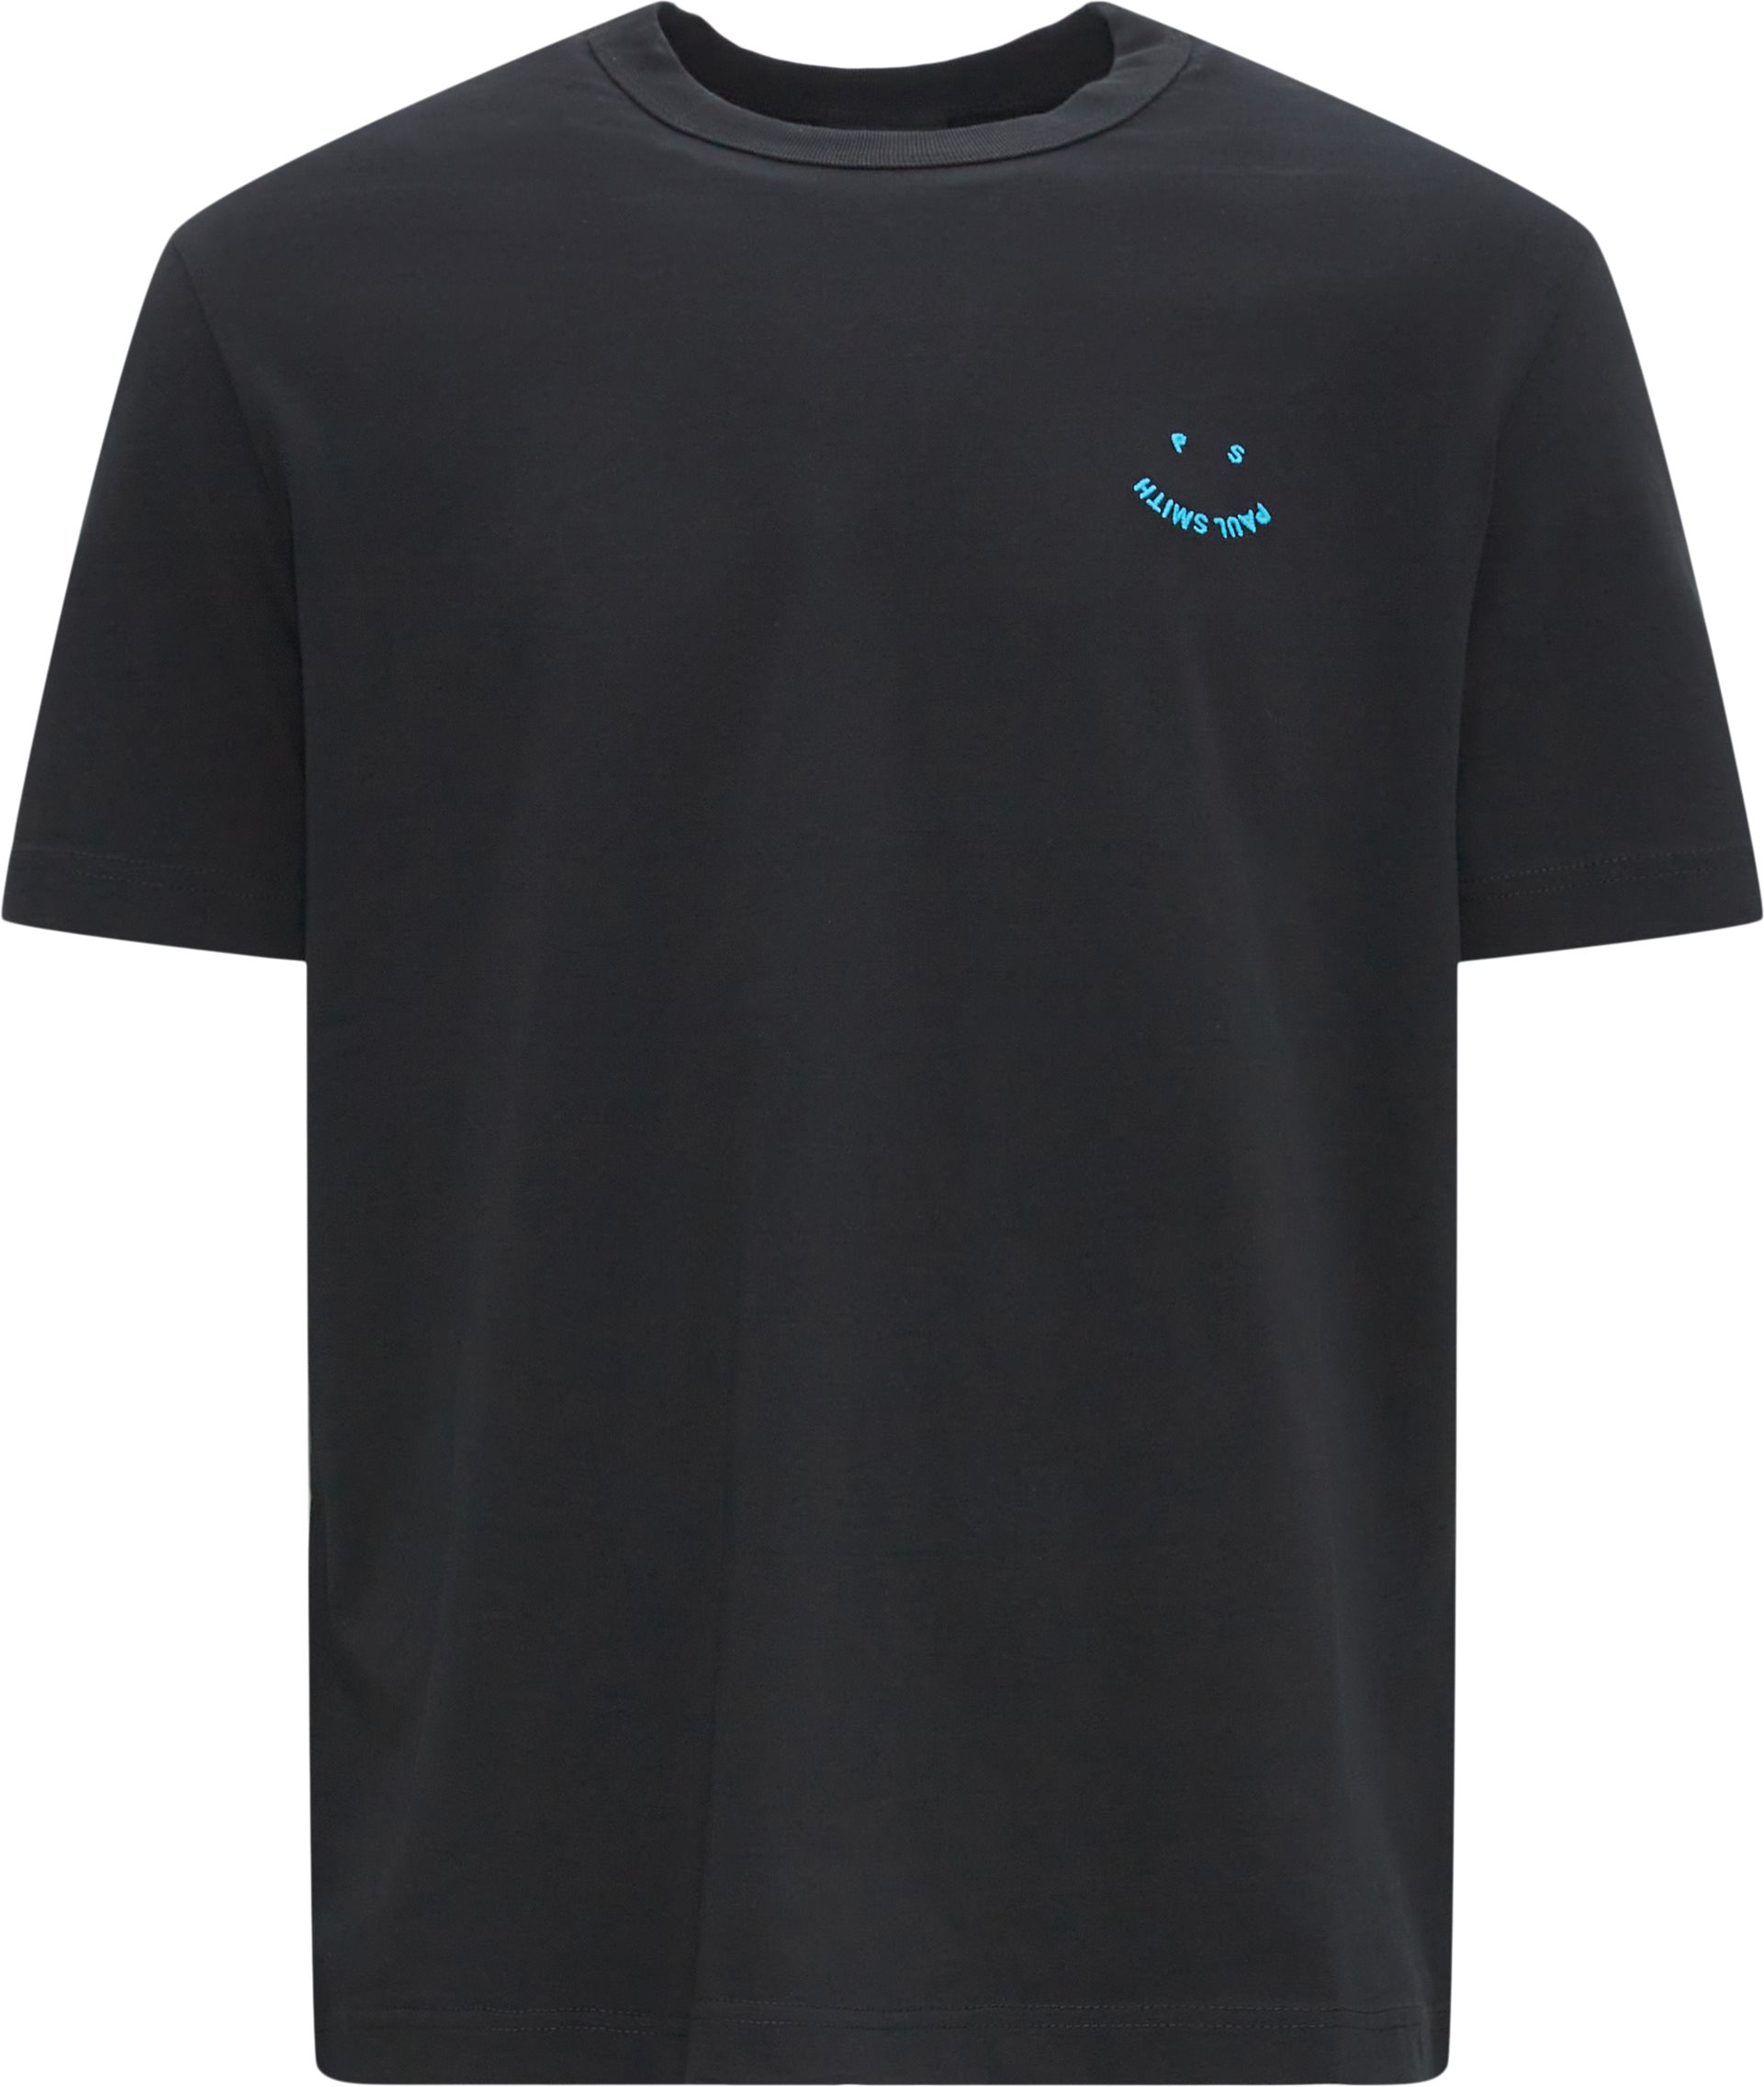 PS Paul Smith T-shirts 673XE J21154 Sort